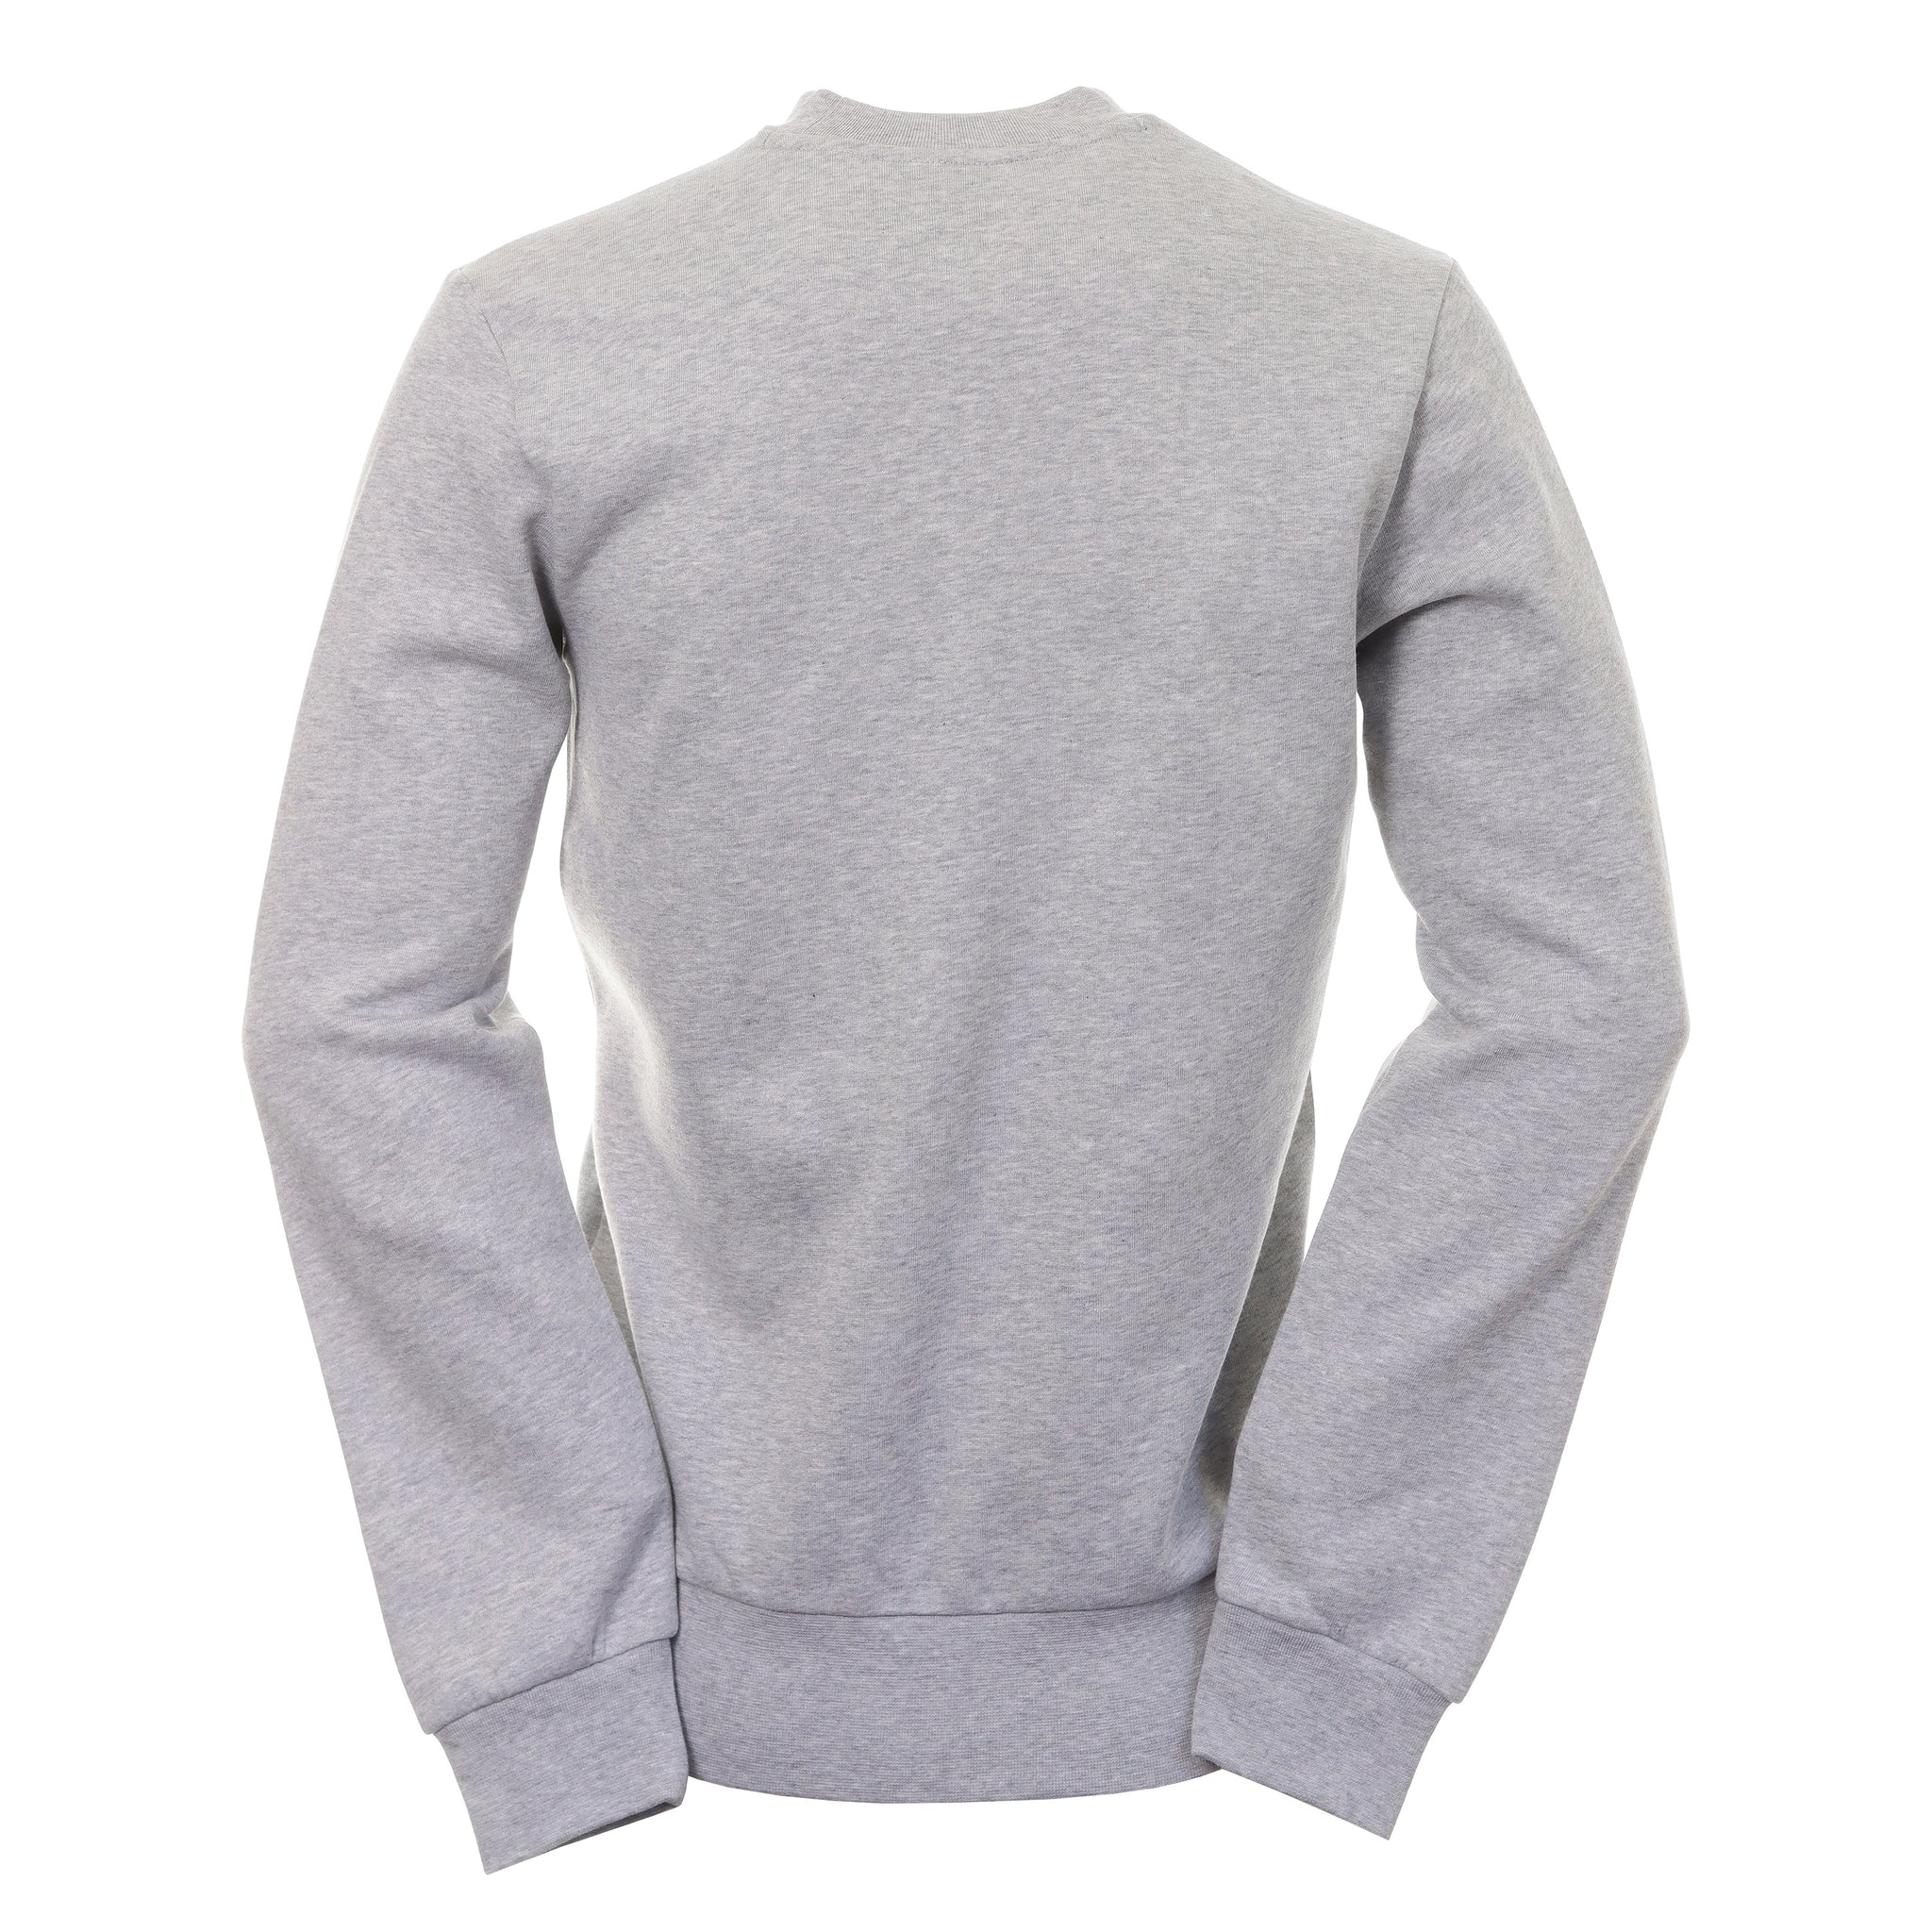 lacoste-crew-neck-fleece-sweater-sh9608-grey-chine-cca